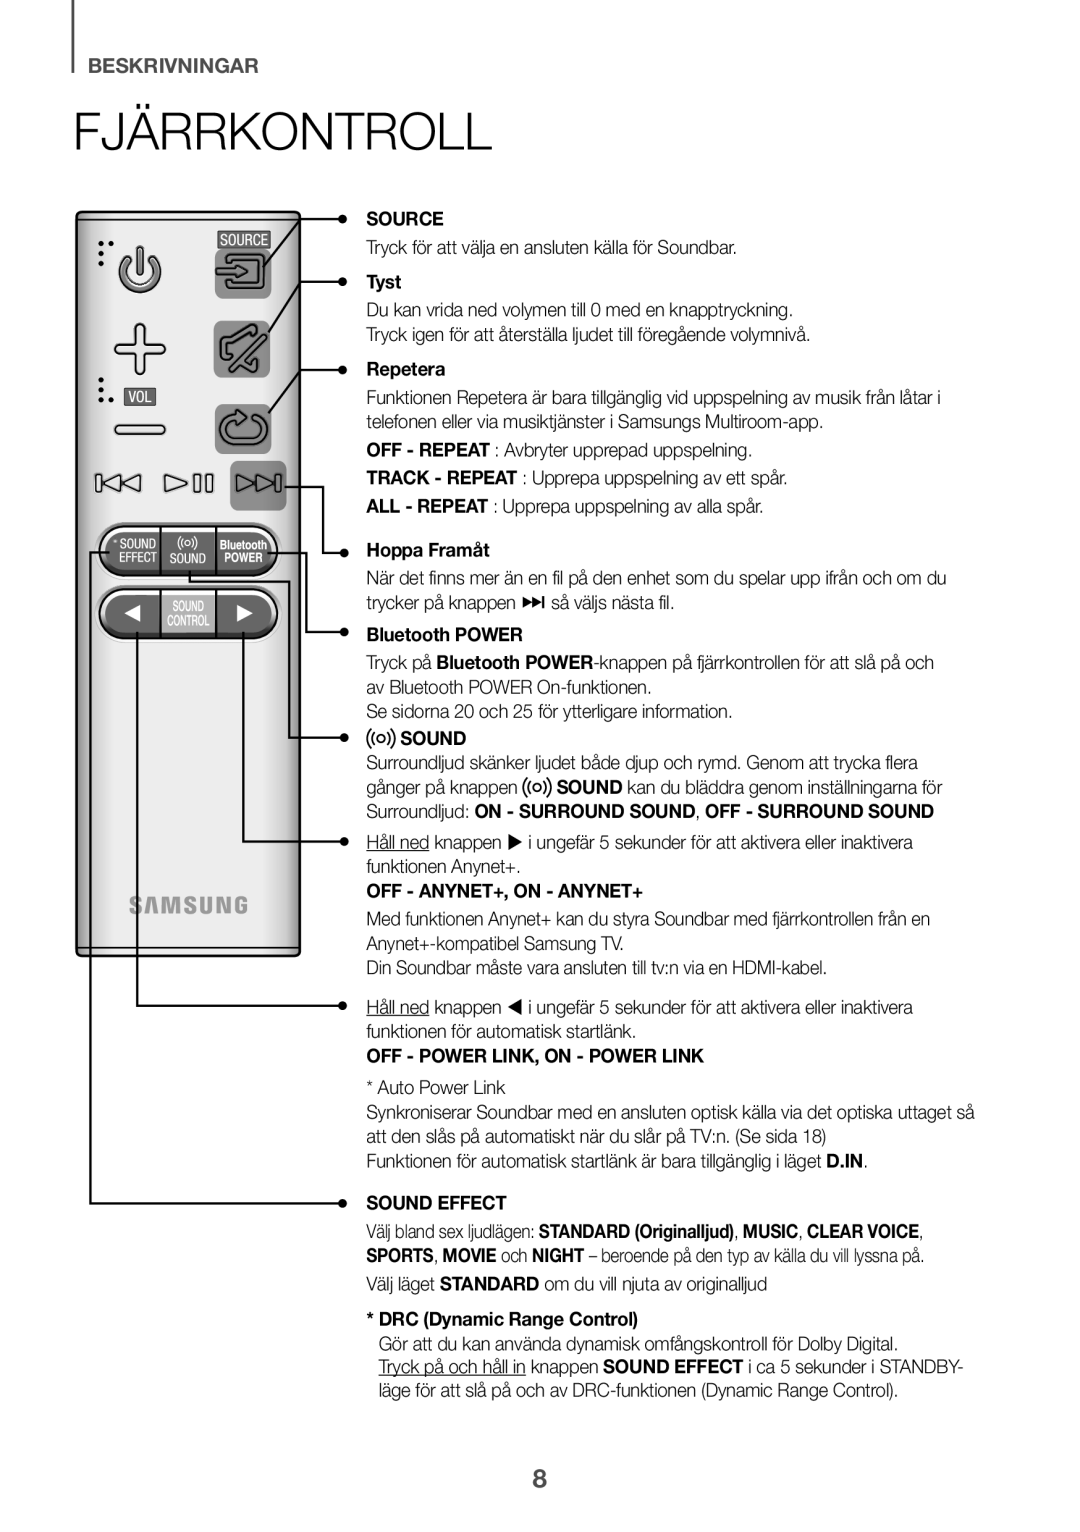 Samsung HW-K660/XE, HW-K651/EN Fjärrkontroll, beskrivningar, Source, Tyst, Repetera, Hoppa Framåt, Bluetooth POWER, Sound 